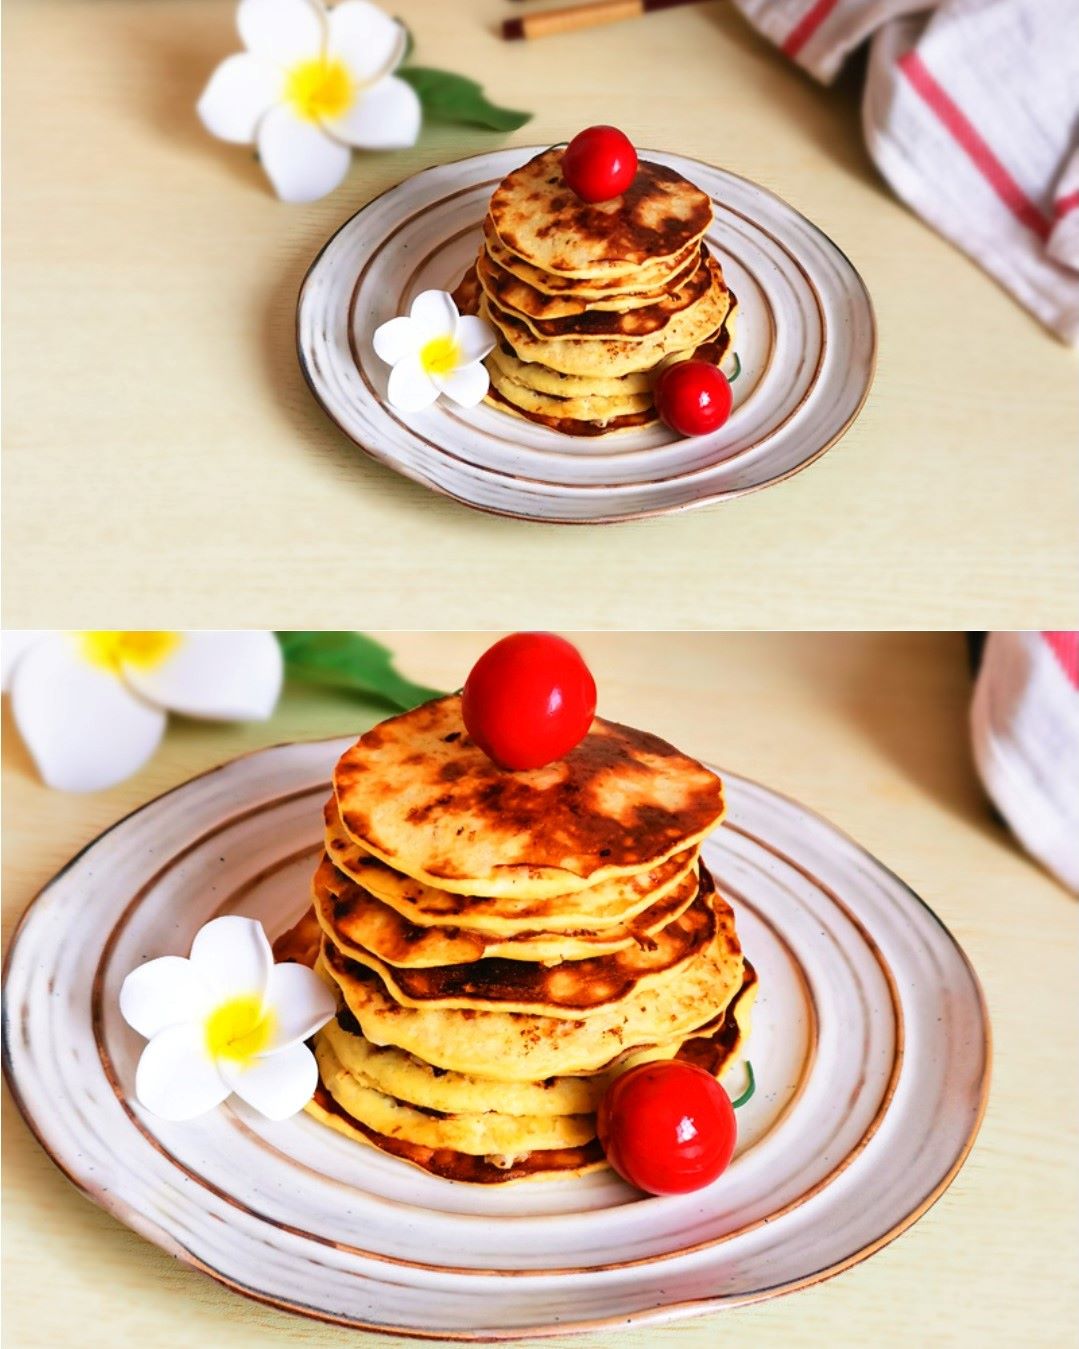 Banana and egg pancakes for brekfast 